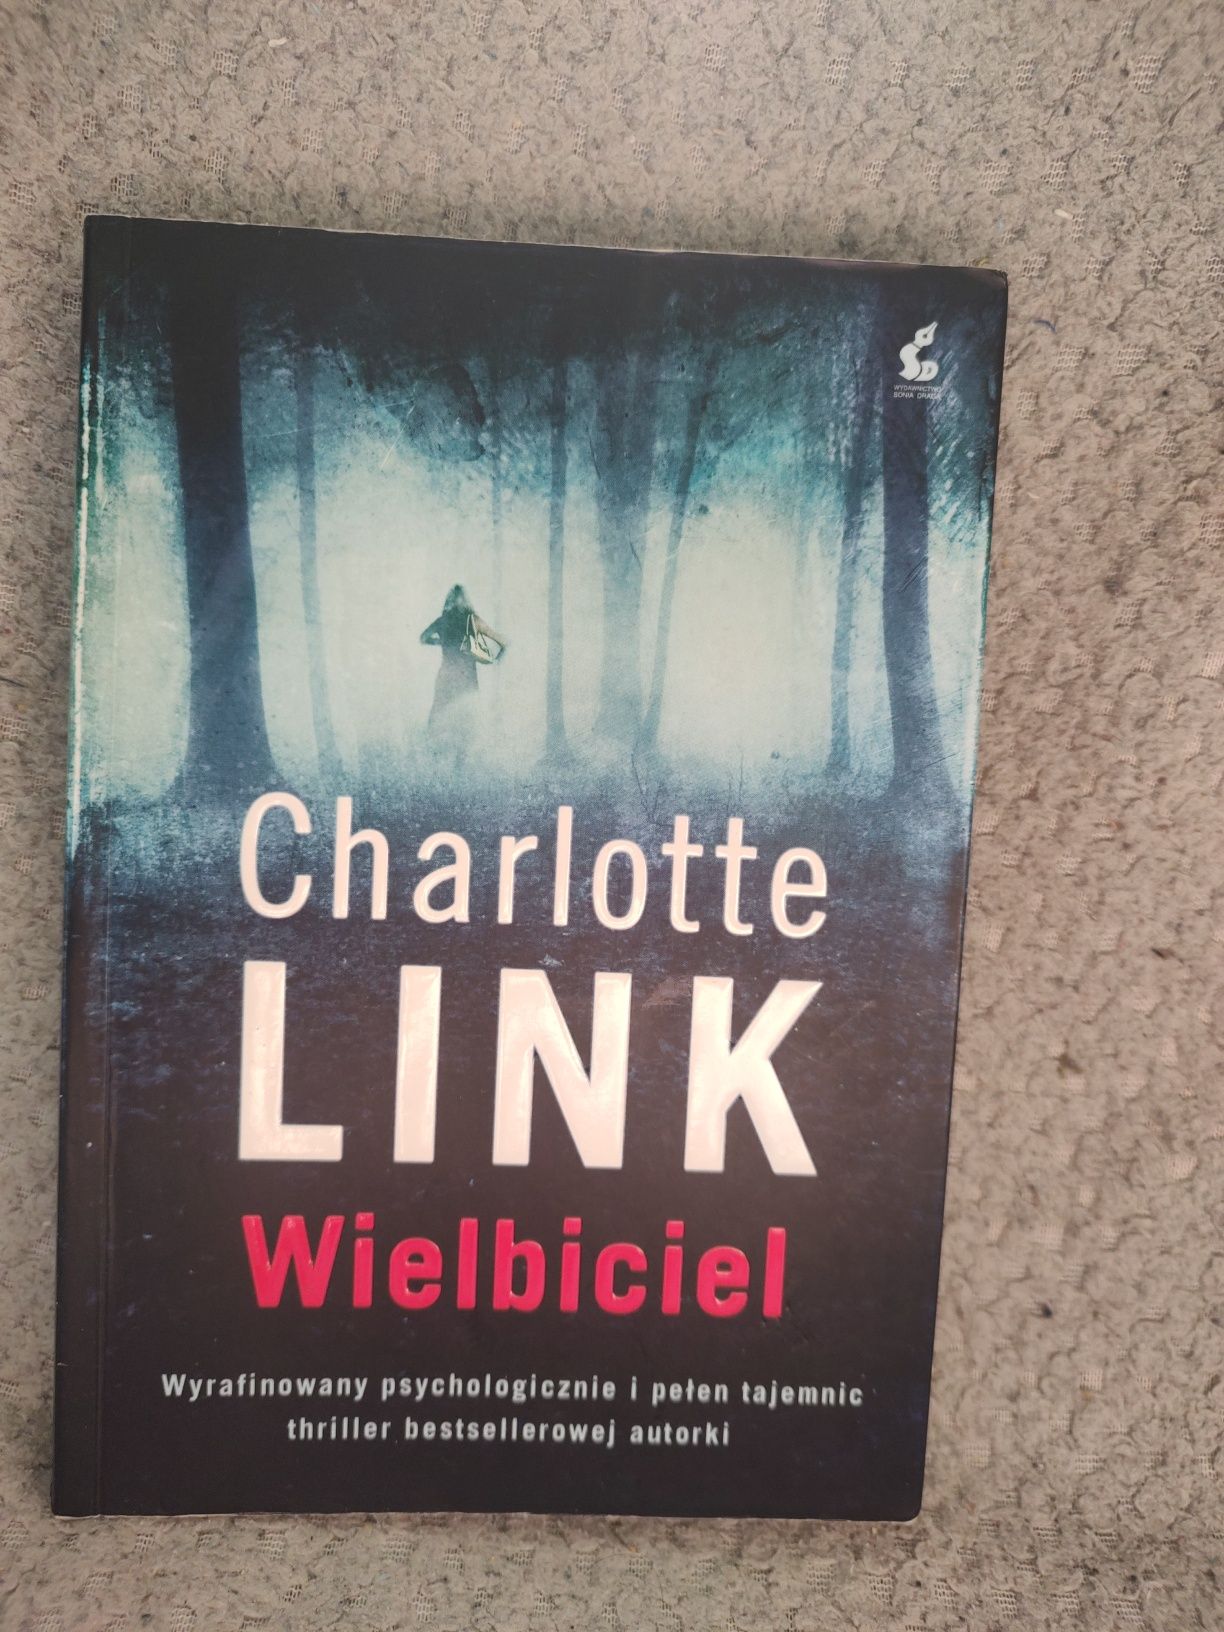 Książka Charlotte Link "Wielbiciel"